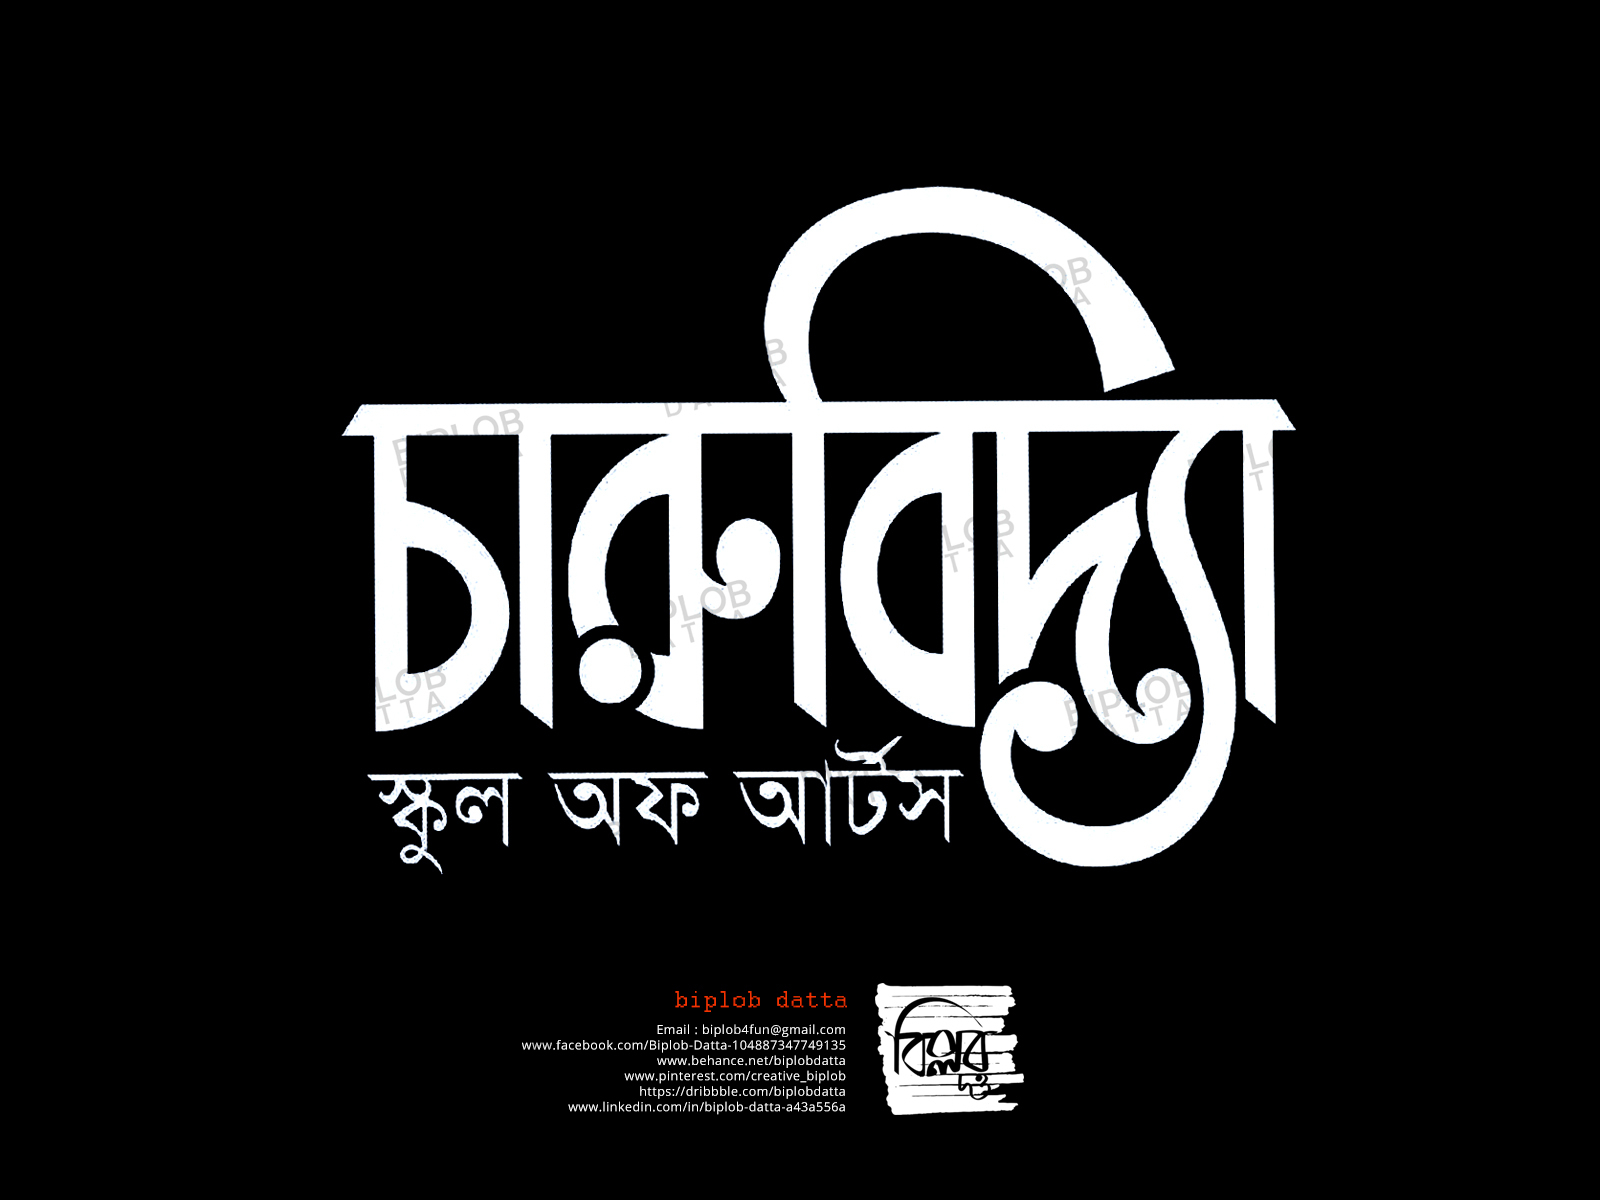 bangla font for photoshop cs5 free download